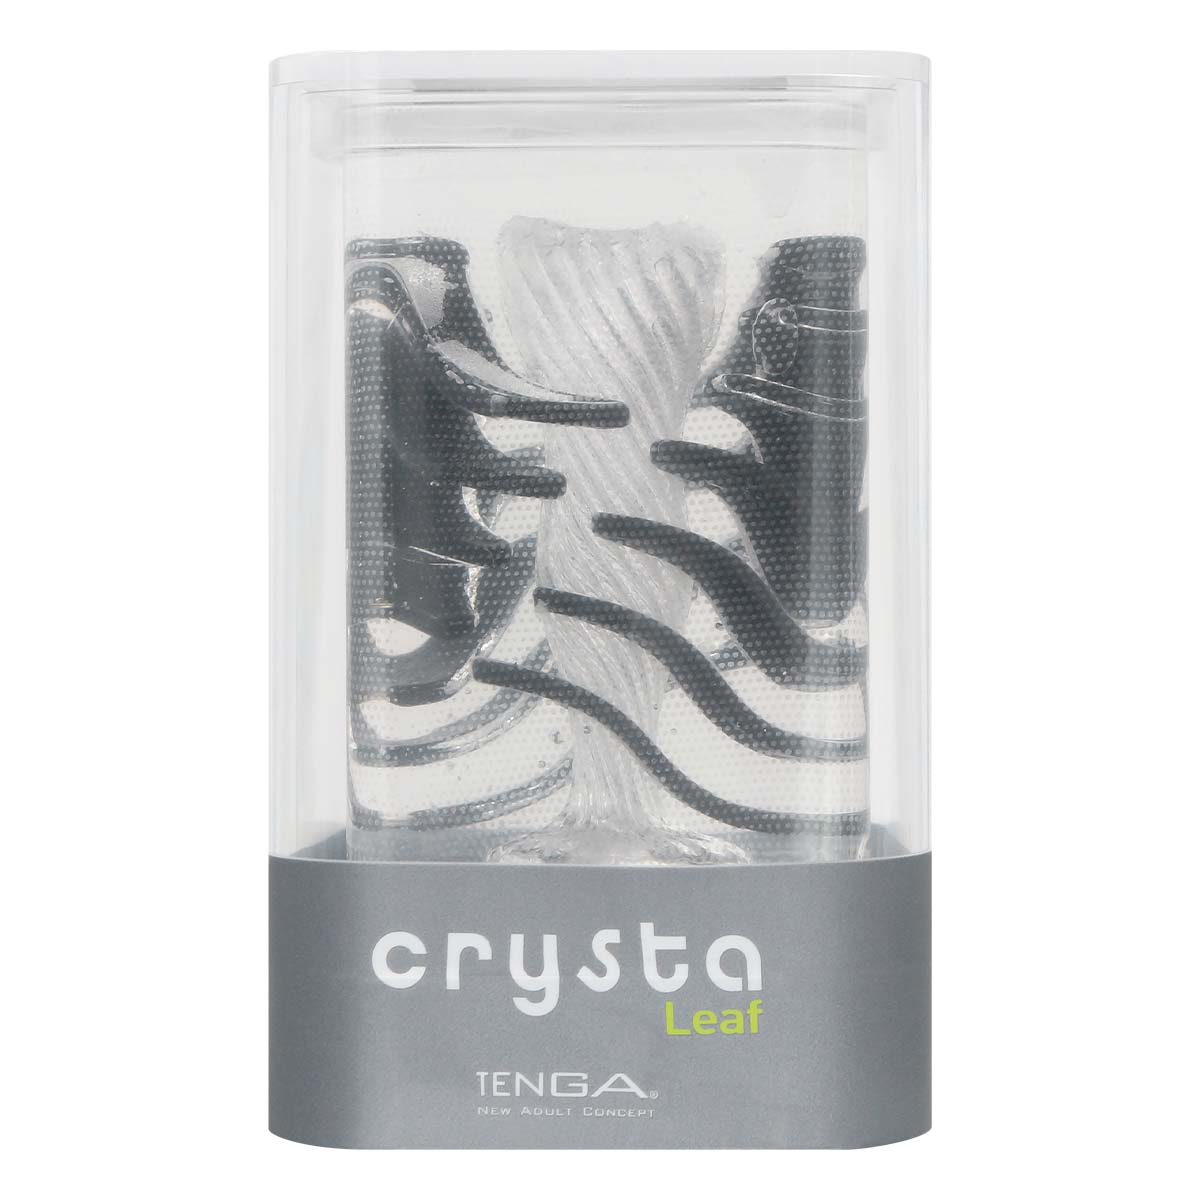 TENGA crysta Leaf 流葉-TENGA-TENGA 香港網上專門店 - 專營 TENGA 飛機杯及潤滑劑